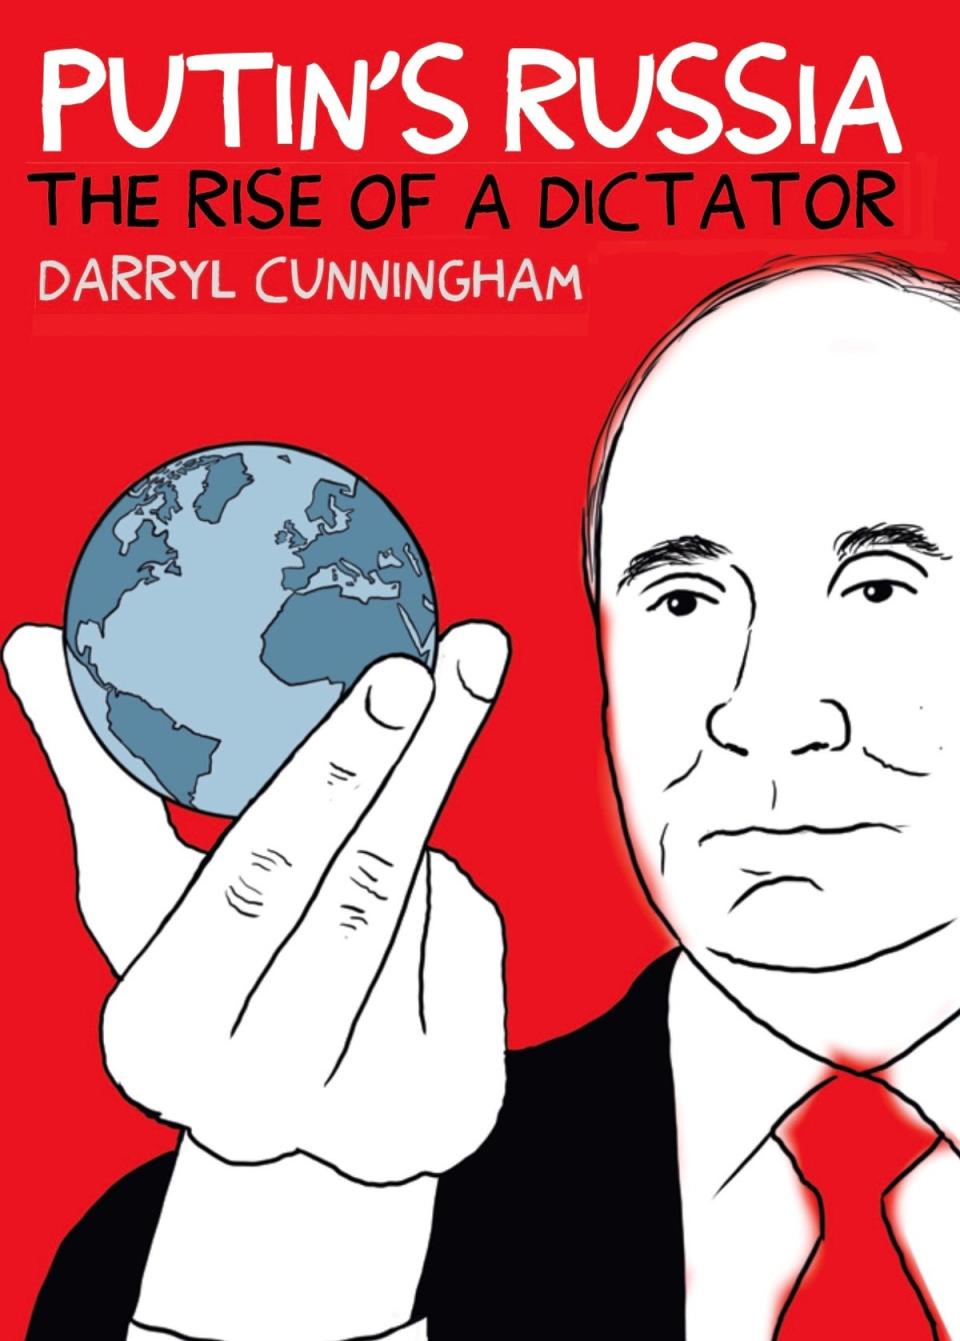 Putin’s Russia by British cartoonist Darryl Cunningham (Darryl Cunningham)